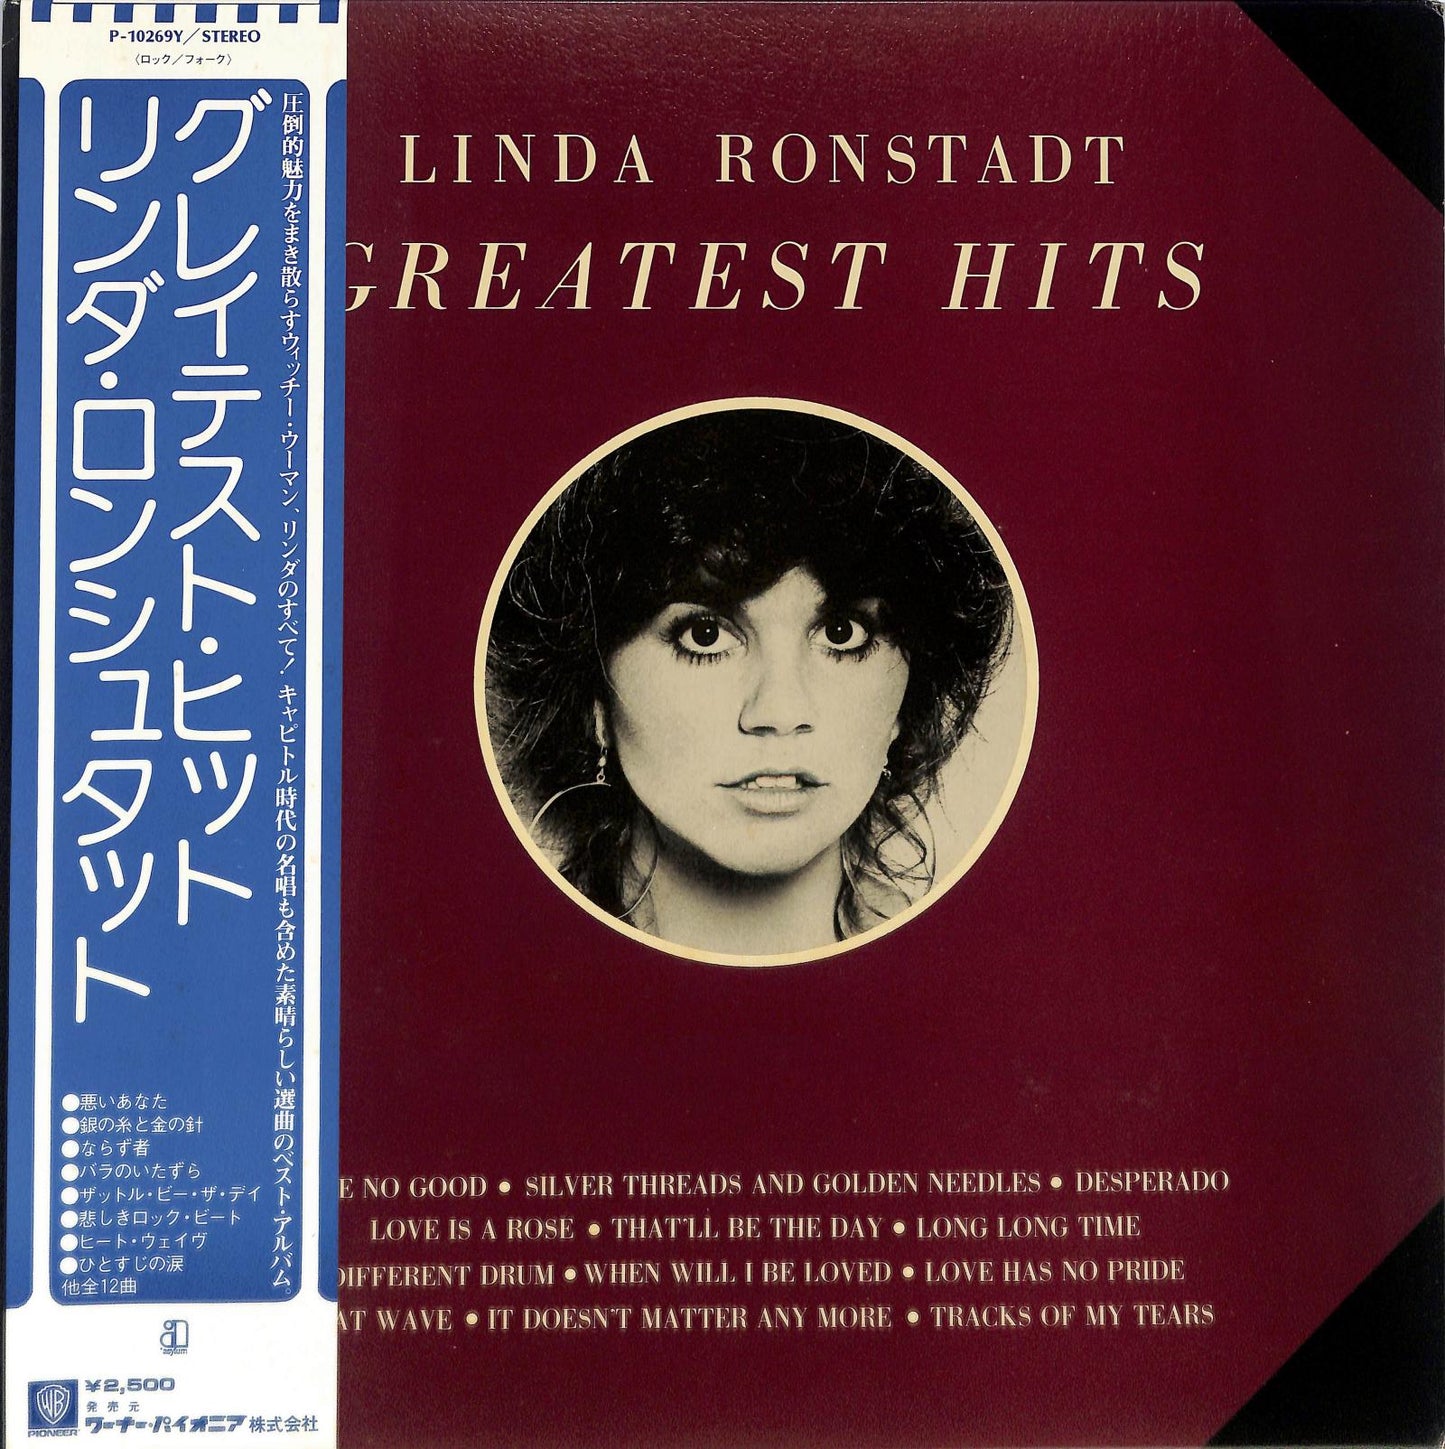 LINDA RONSTADT - Greatest Hits